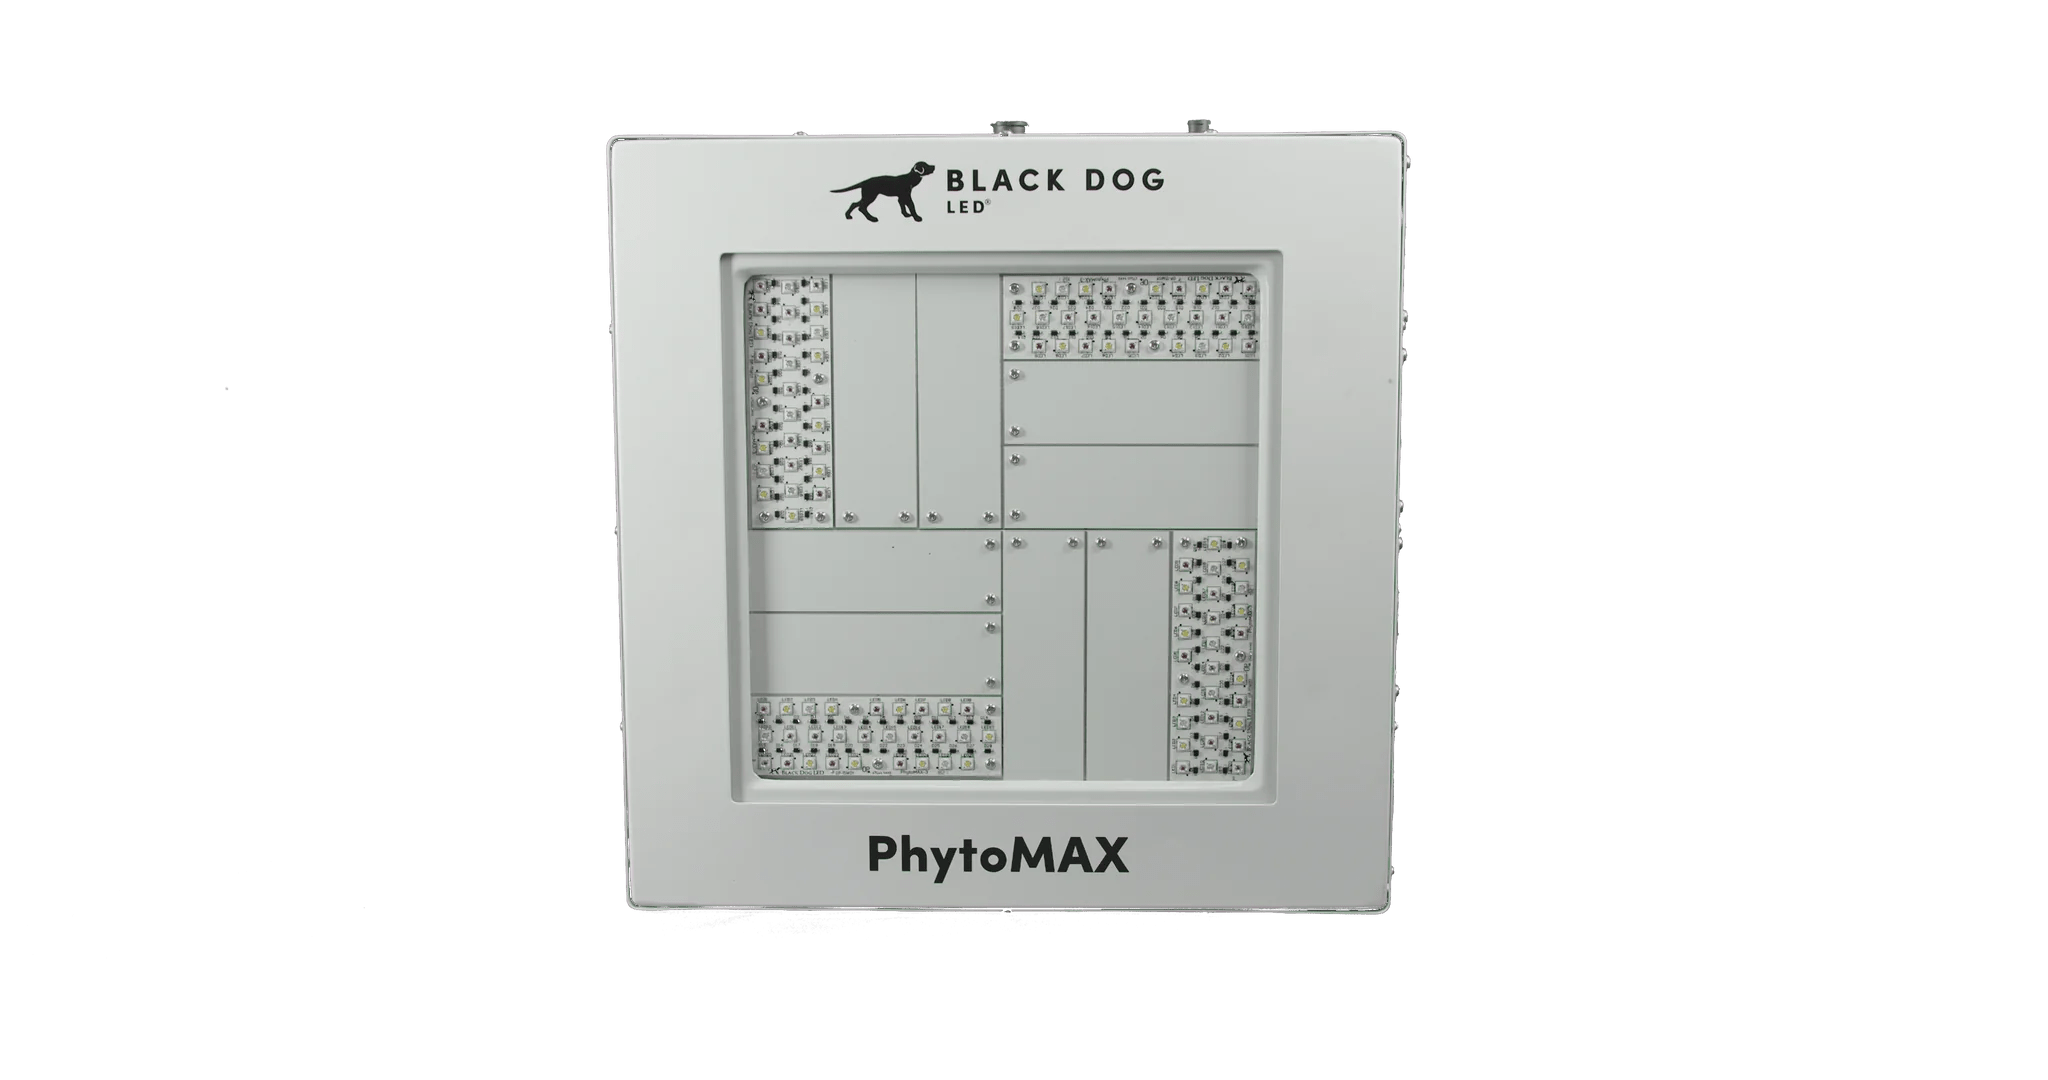 Black Dog PhytoMAX-4 4SC 250 Watt LED Grow Light - Green Thumb Depot